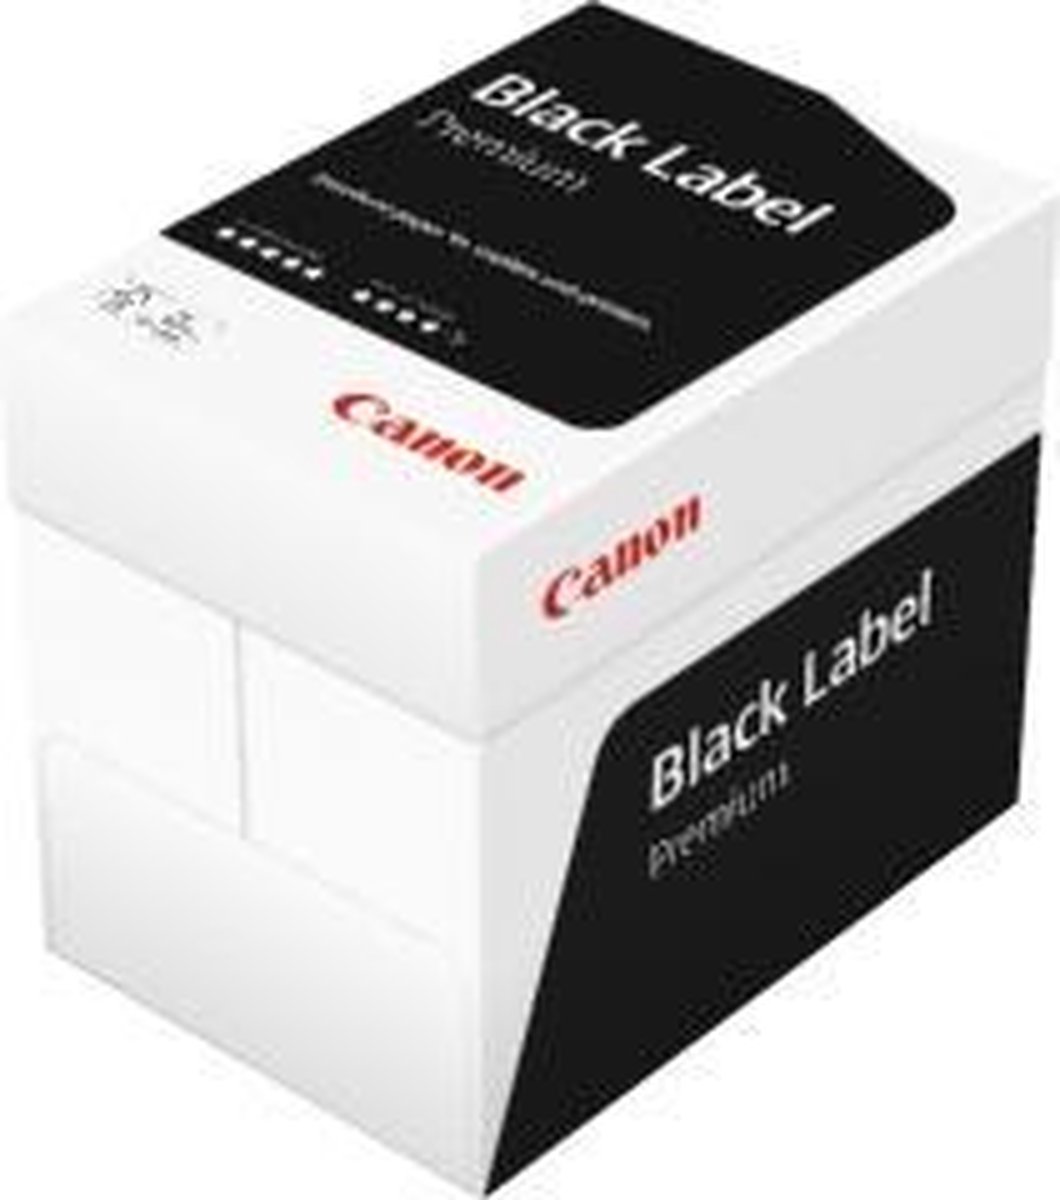 Kopieerpapier Canon Black Label Premium A4 80gr wit 500vel - 5 stuks